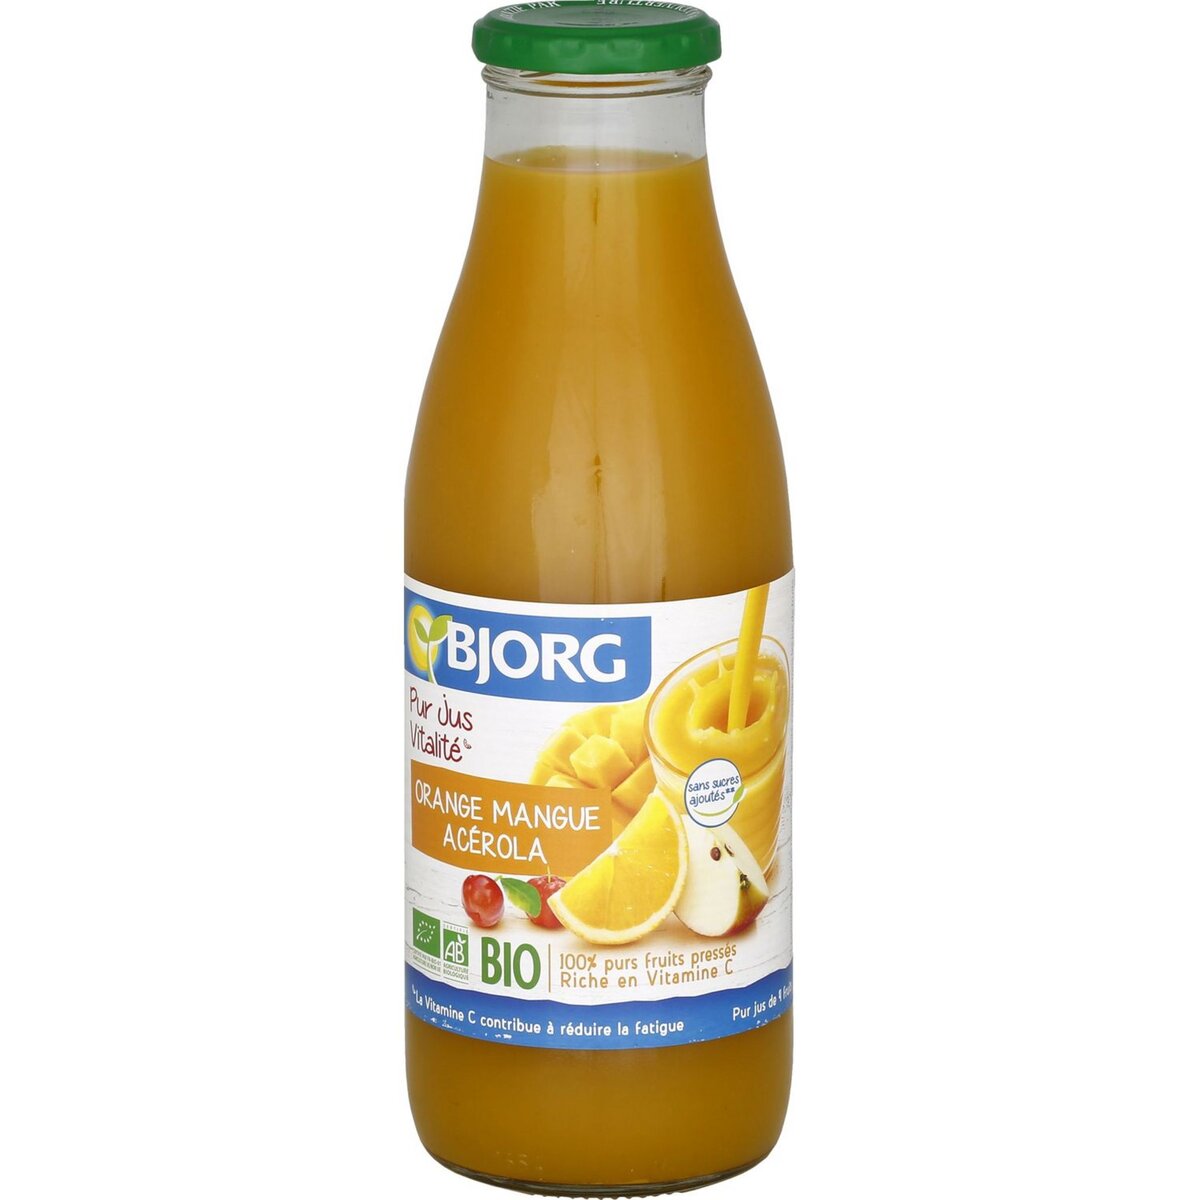 BJORG Pur jus vitalité orange mangue acérola bio 75cl